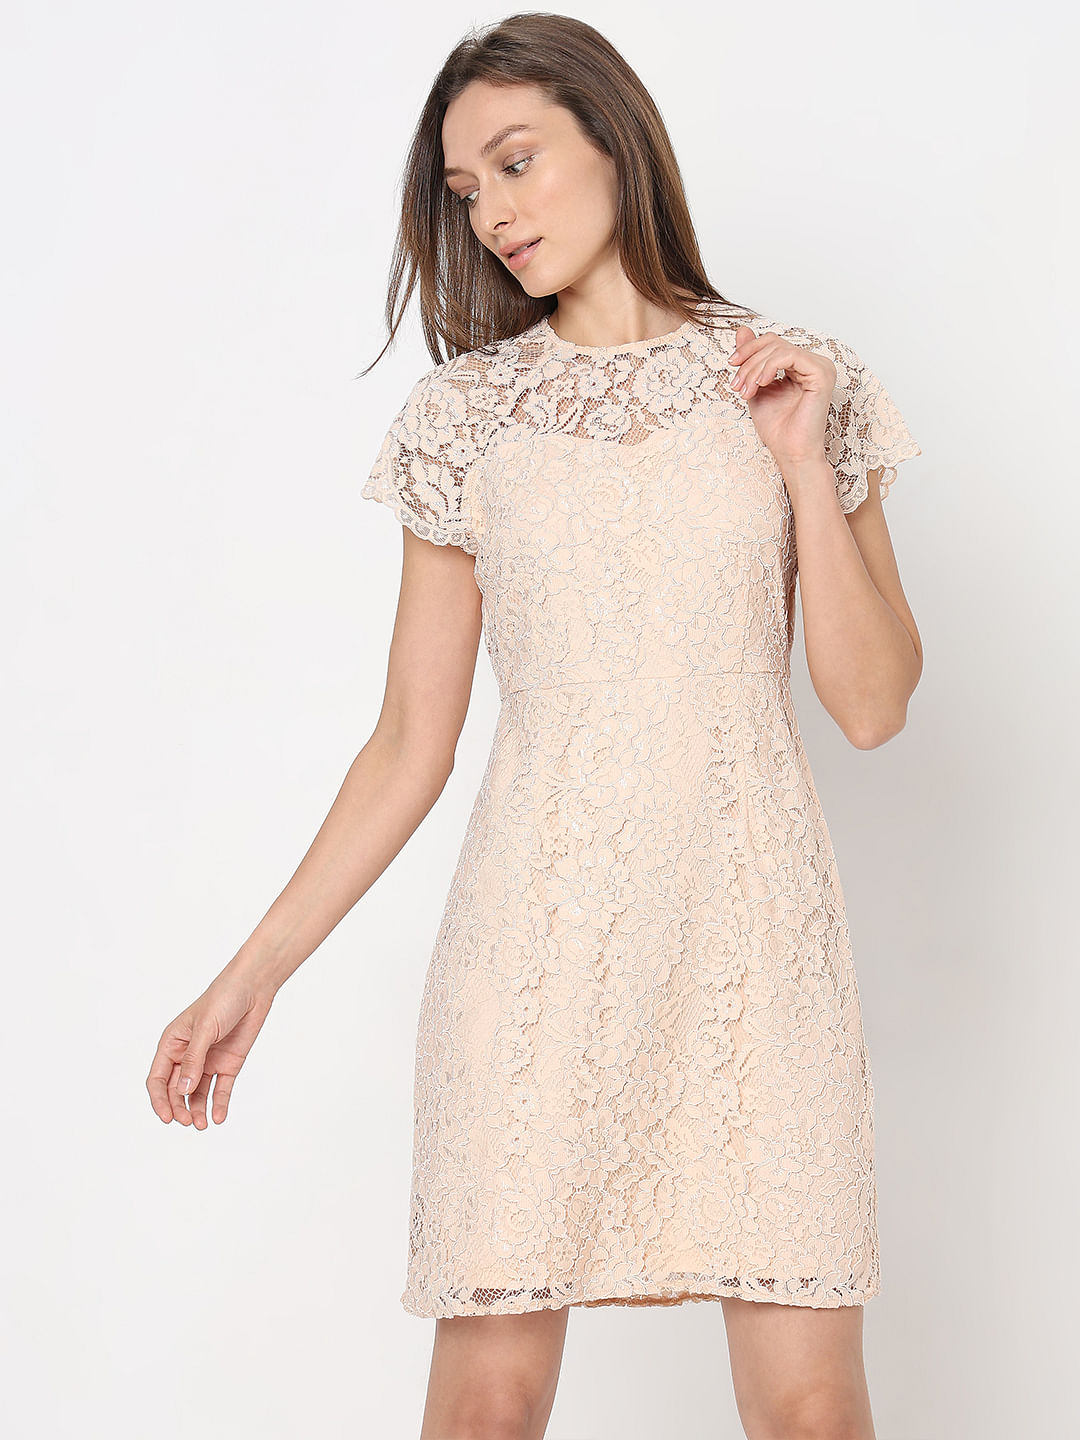 Buy Peach Solid Lace Dress Online - Label Ritu Kumar India Store View